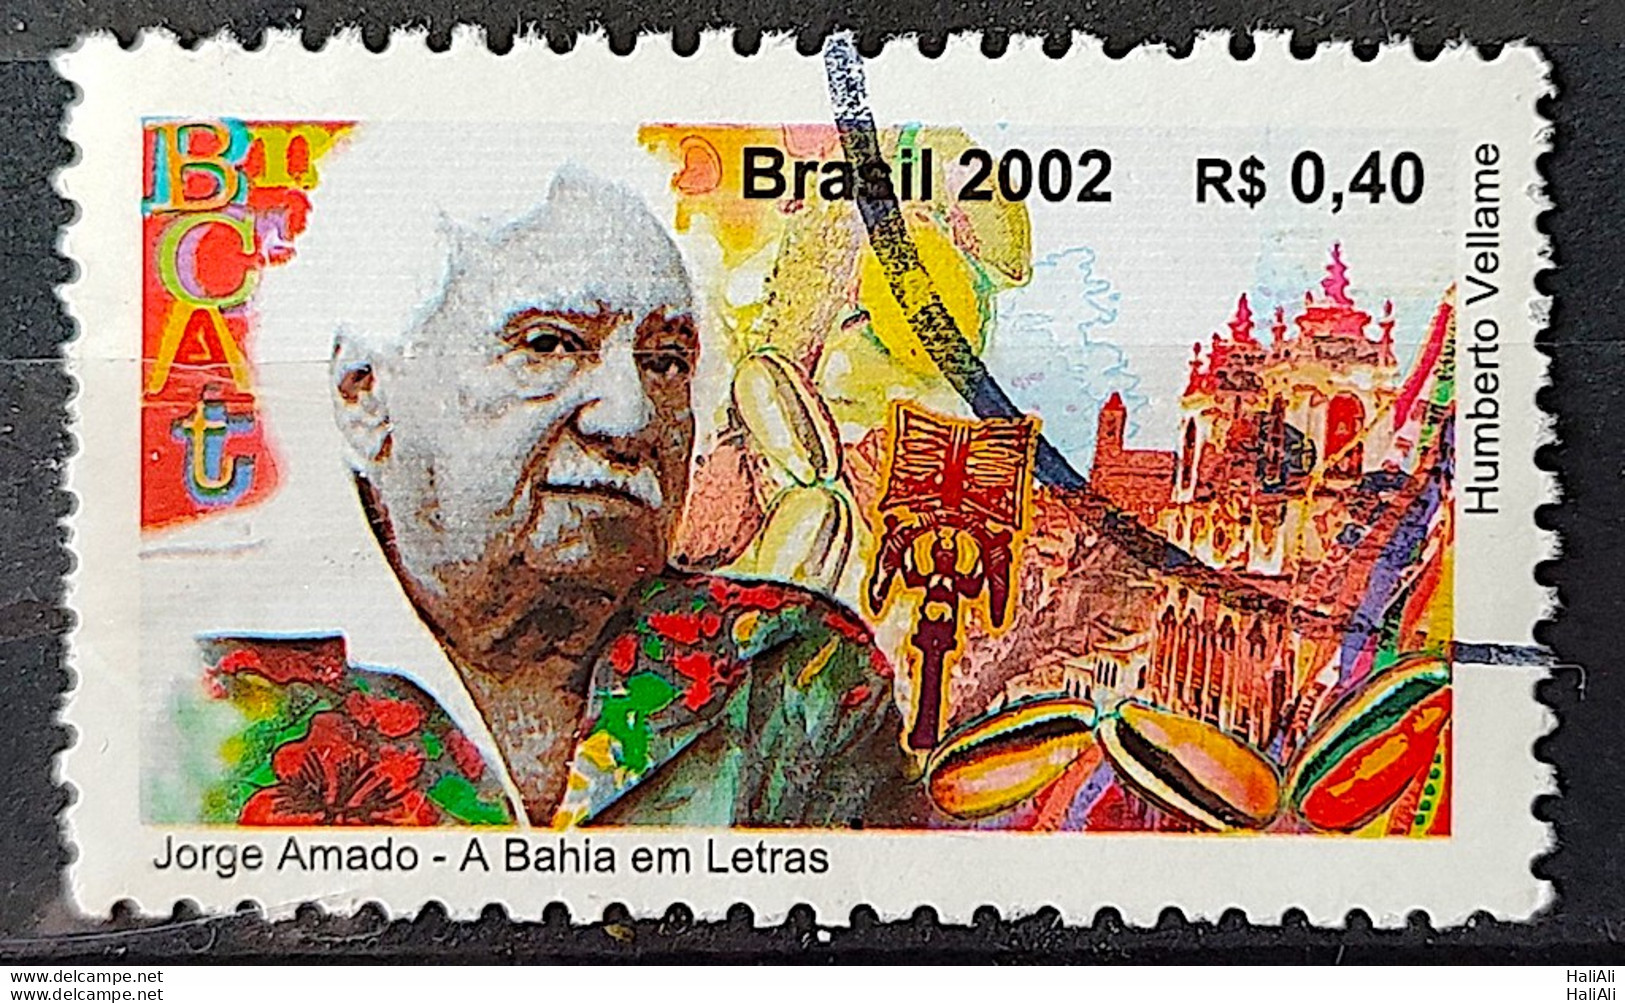 C 2477 Brazil Stamp Jorge Amado Bahia Literature Cocoa Church 2002 Circulated 5 - Used Stamps